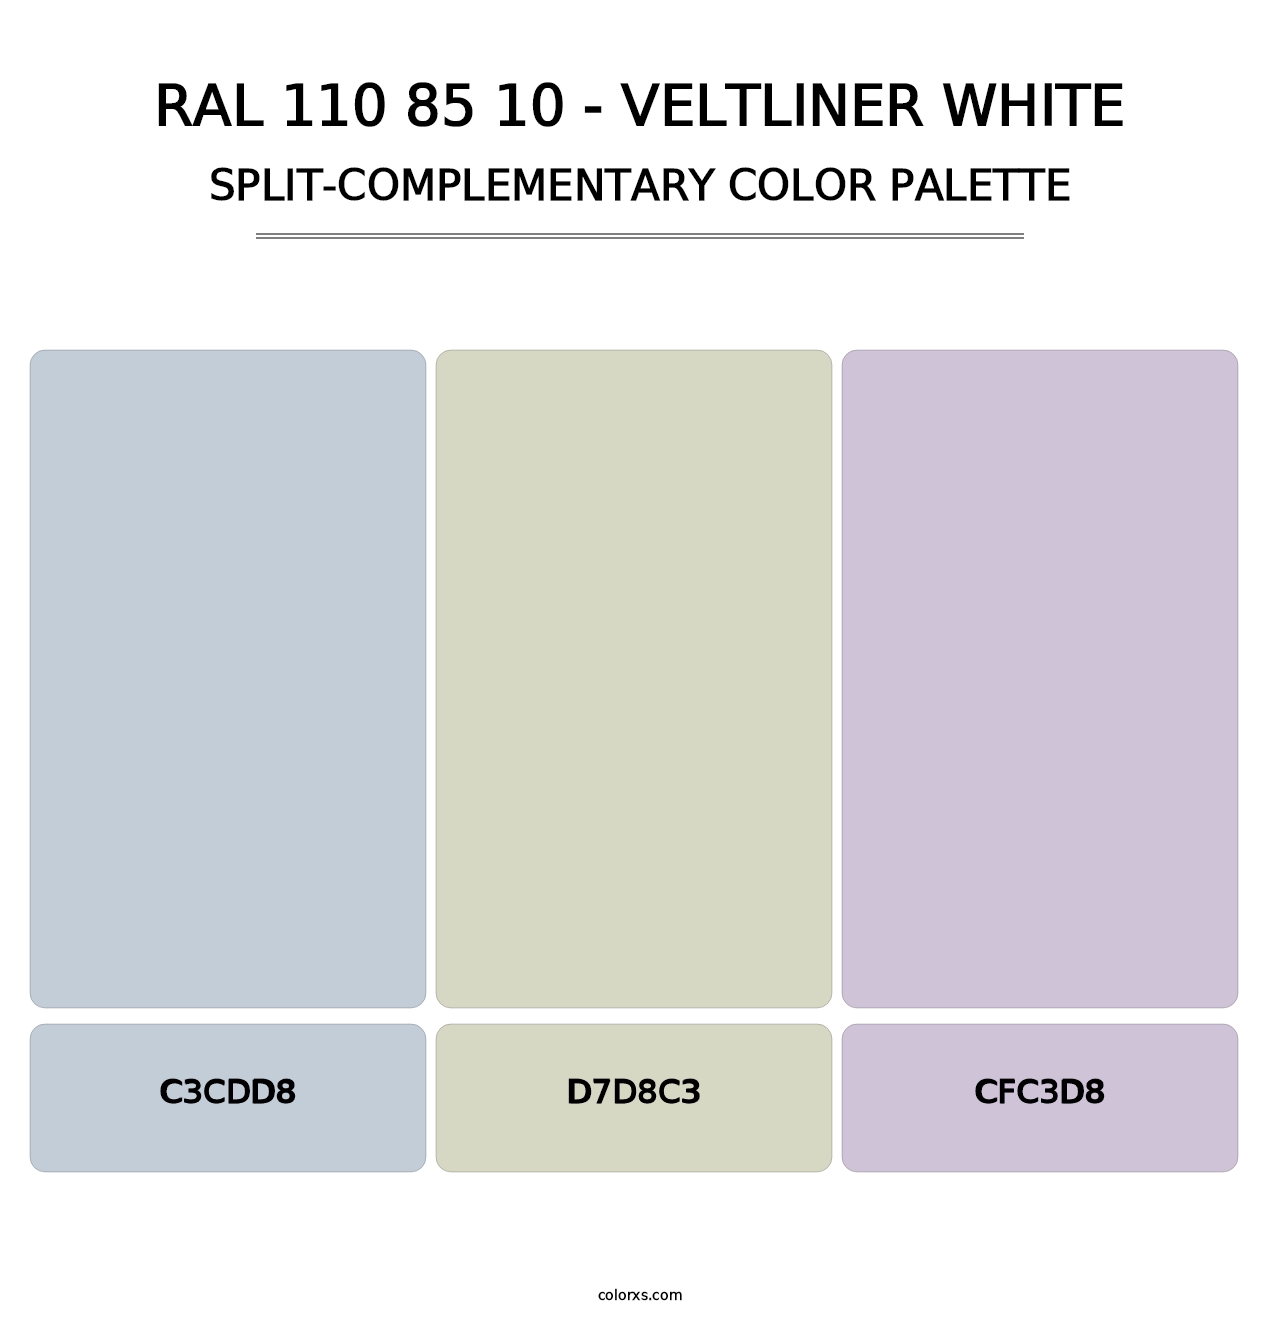 RAL 110 85 10 - Veltliner White - Split-Complementary Color Palette